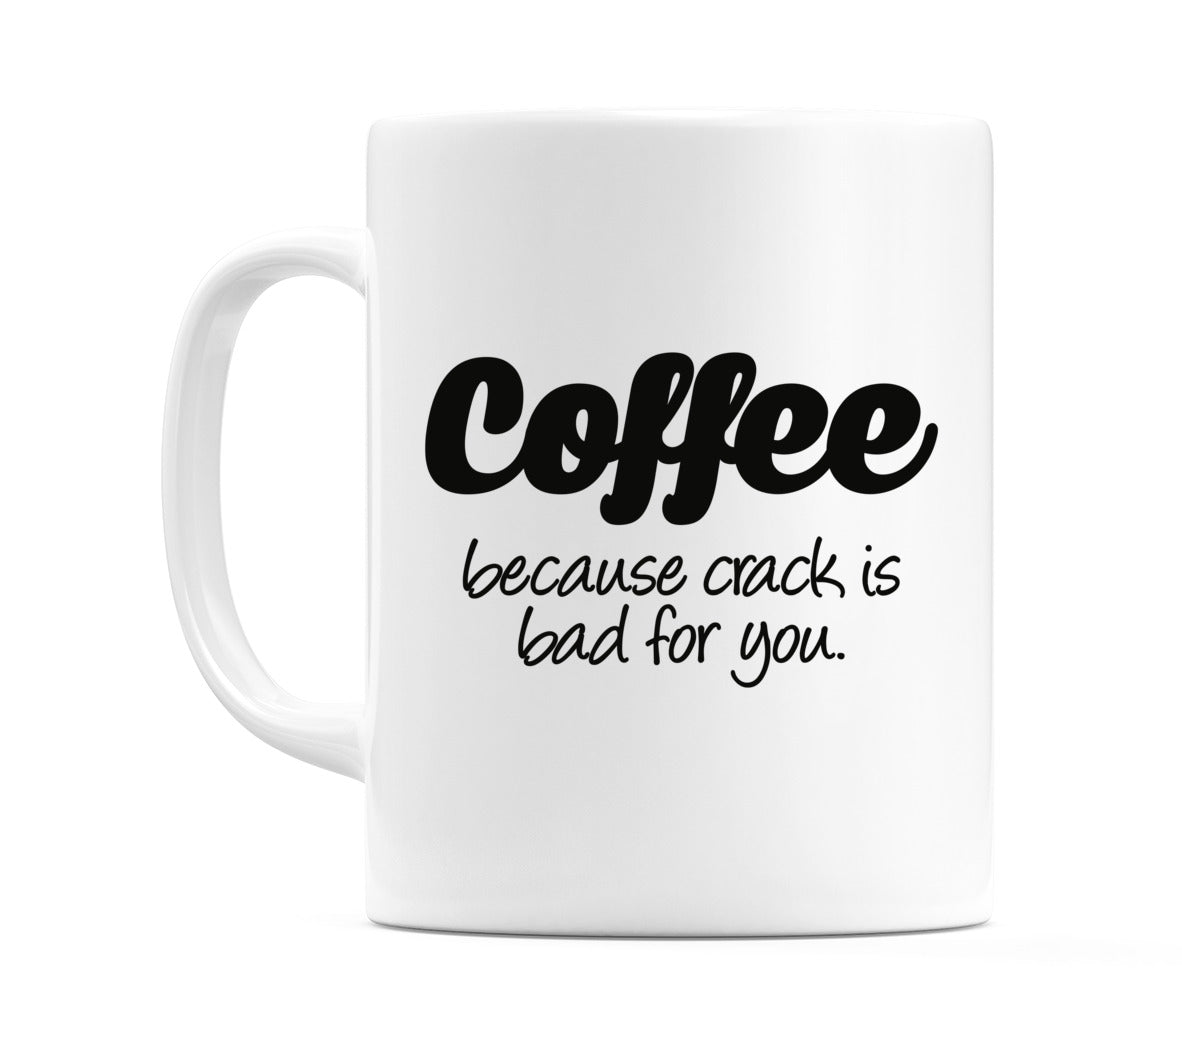 Coffee because crack is bad for you. Mug